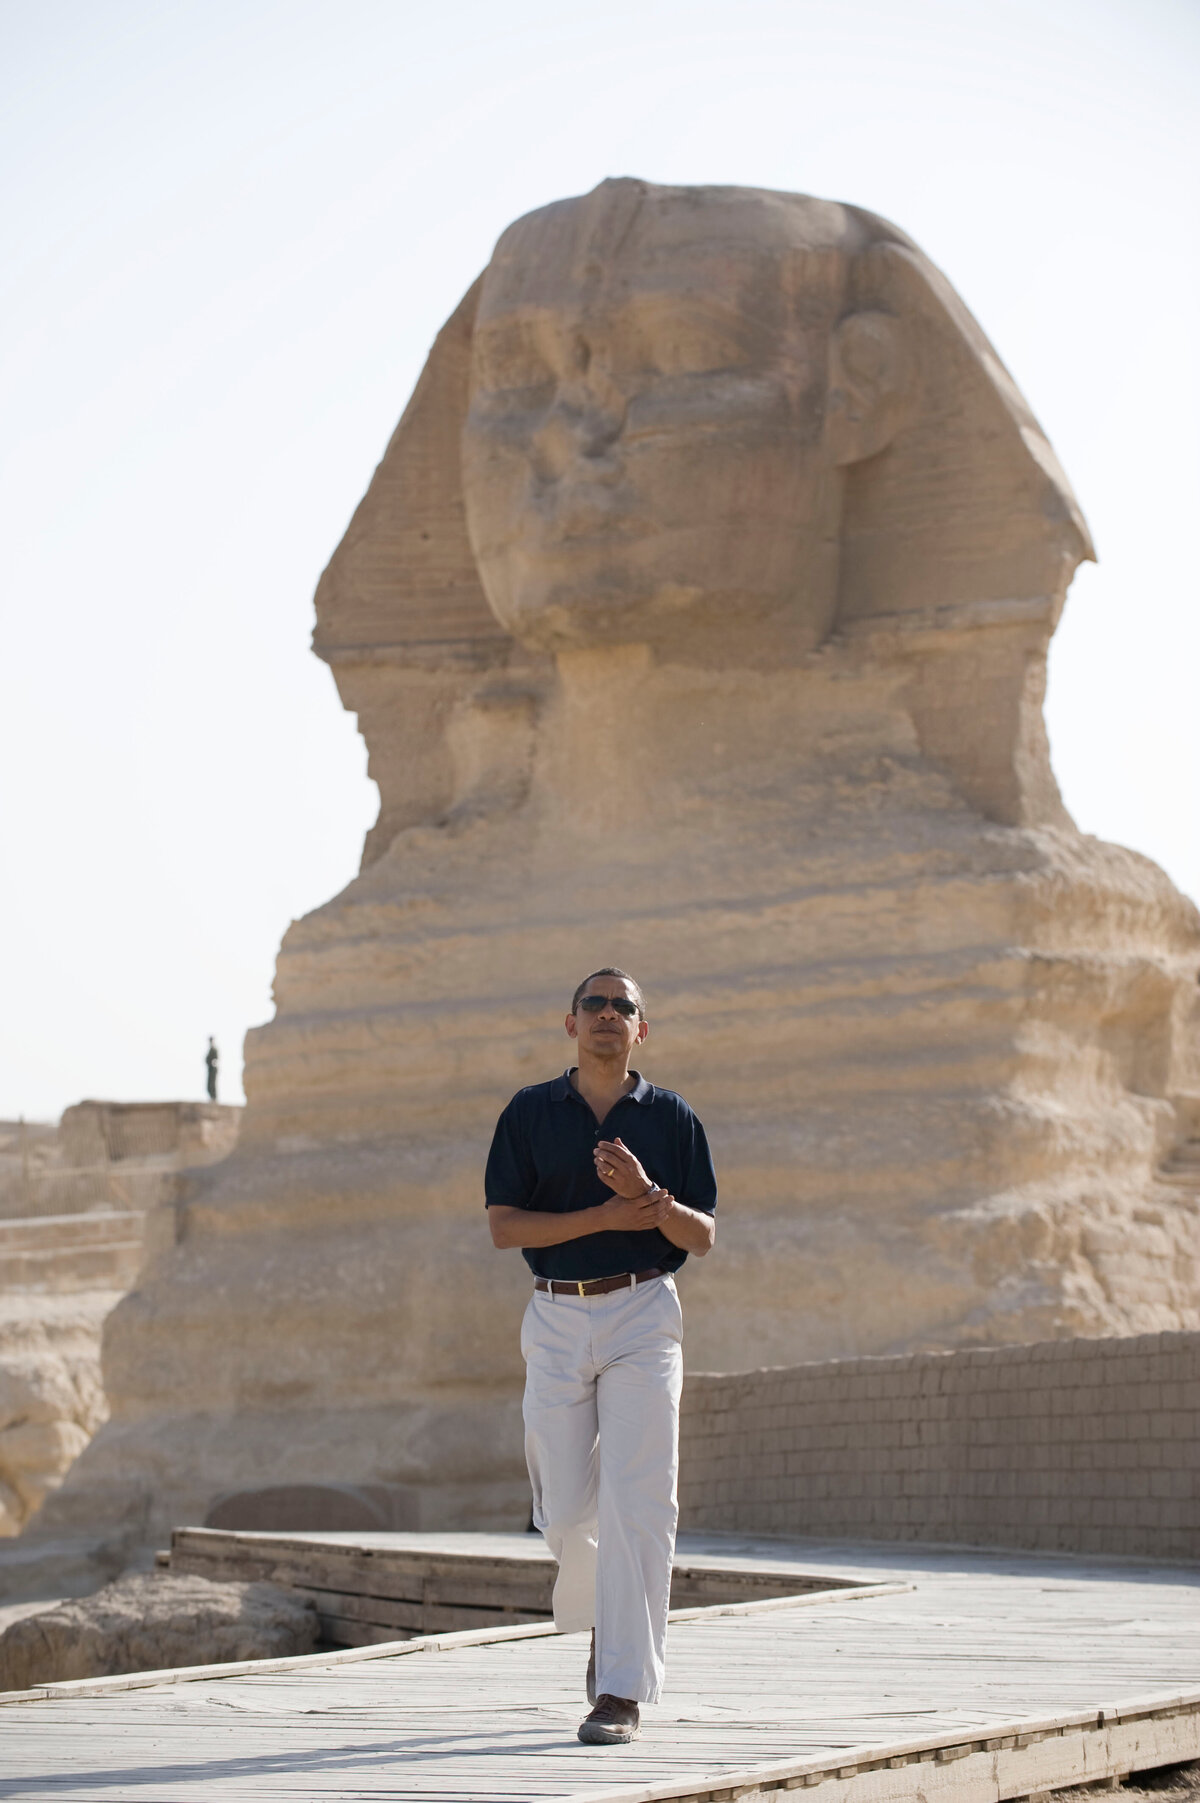 Touring Giza